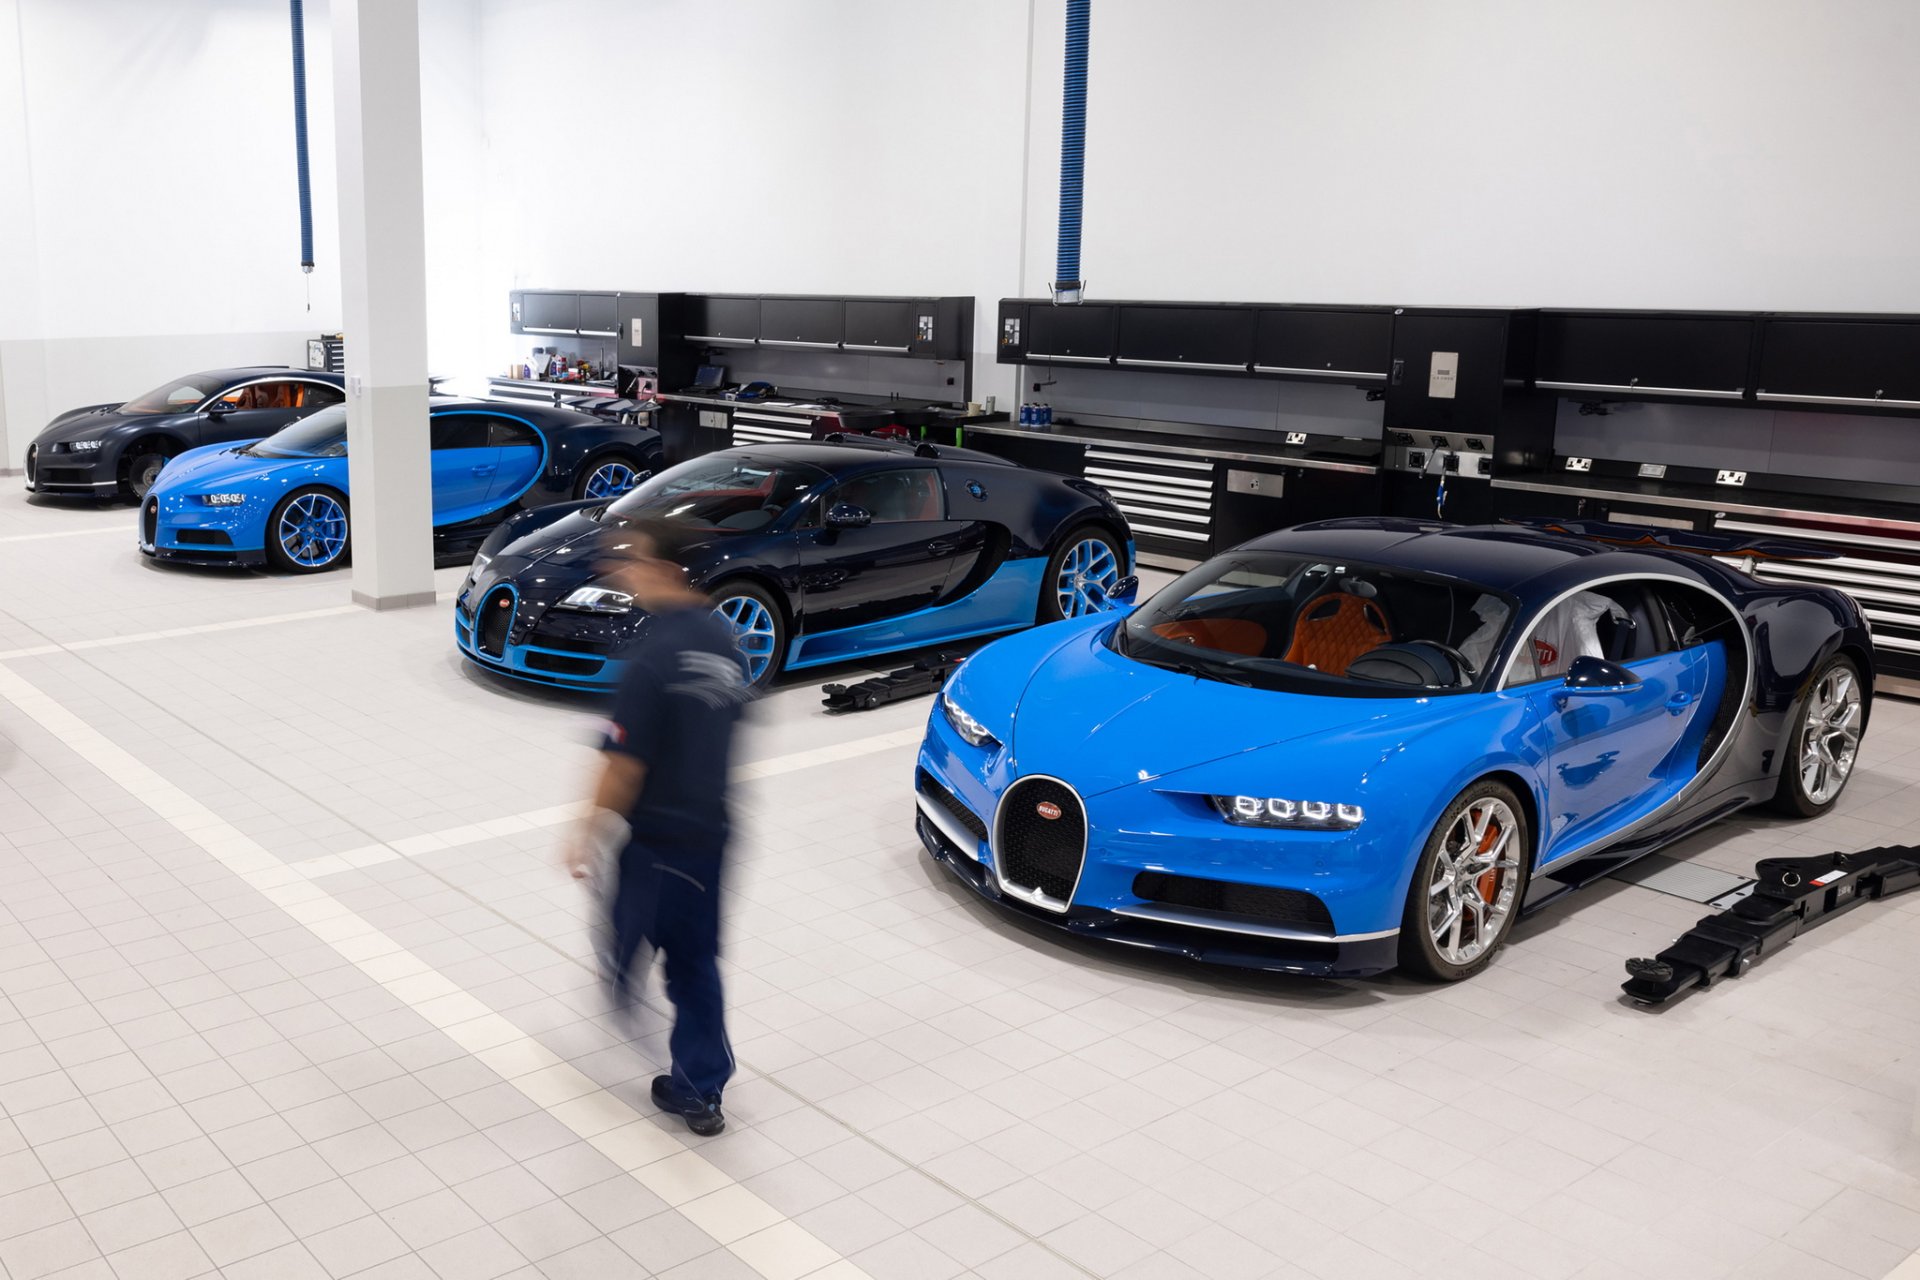 Bugatti London เปิดตัวศูนย์บริการหลังการขายแห่งใหม่ ล้ำสมัยสะดวกสบาย...